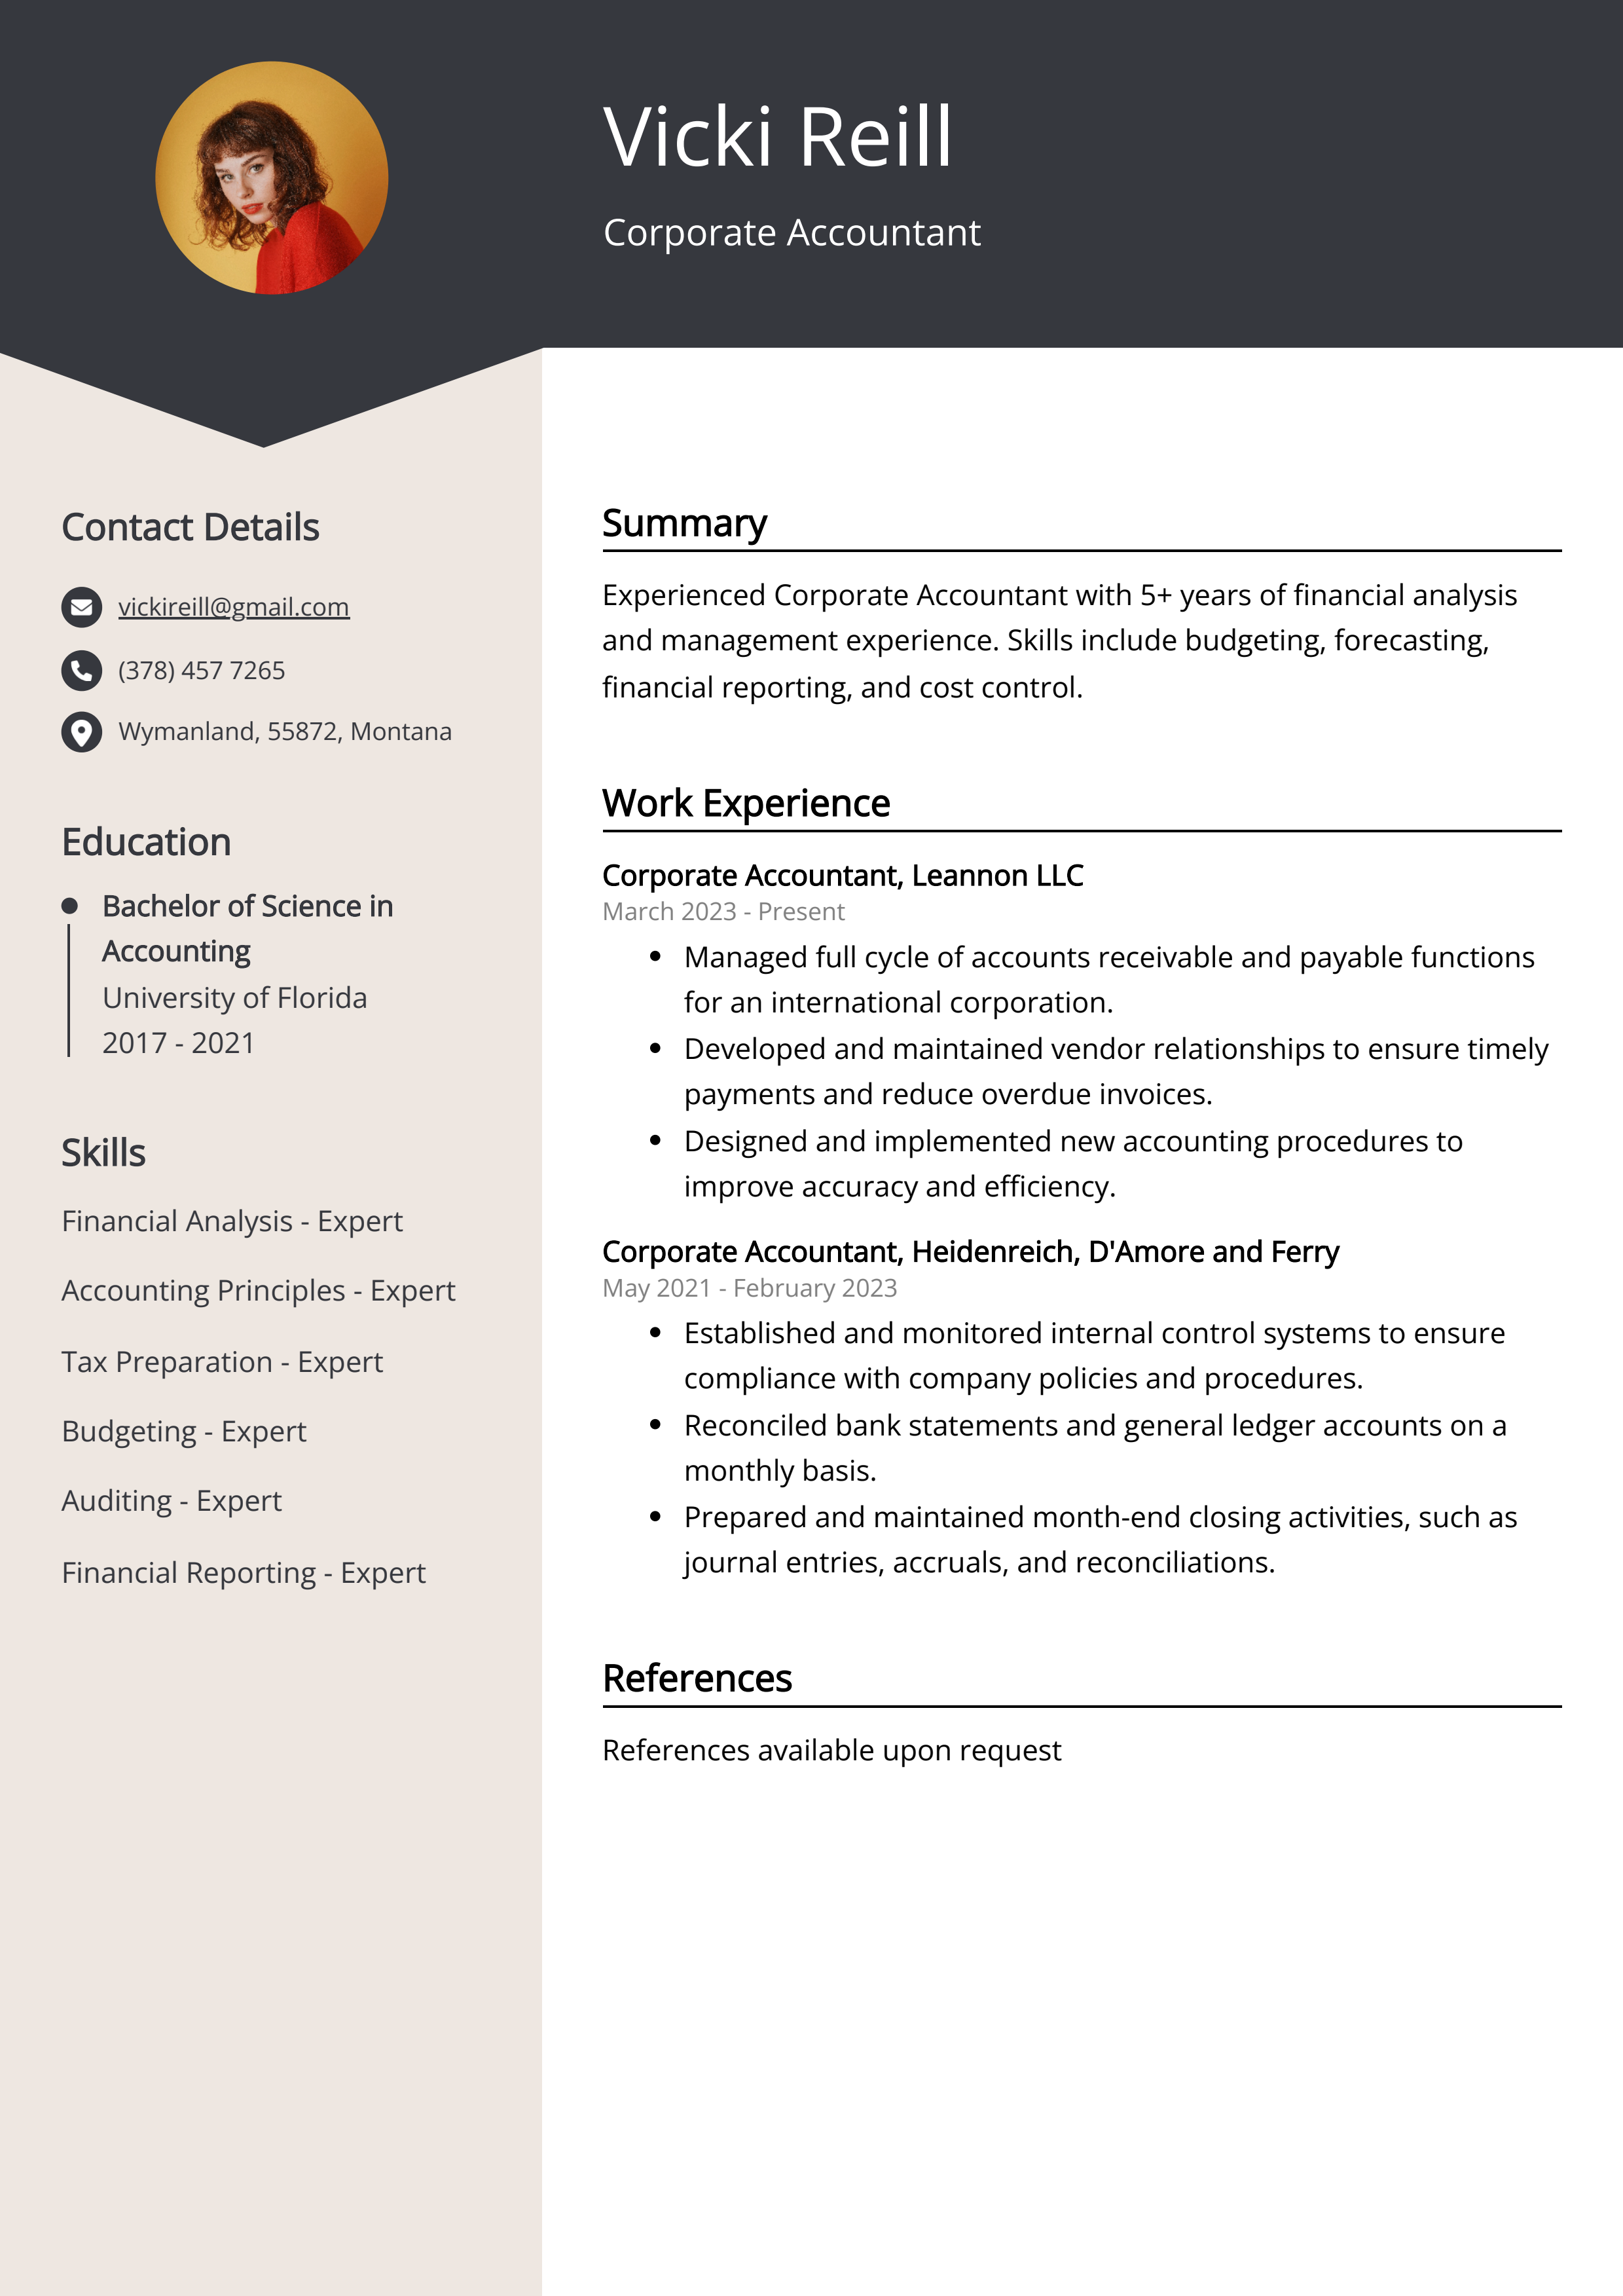 Corporate Accountant CV Example